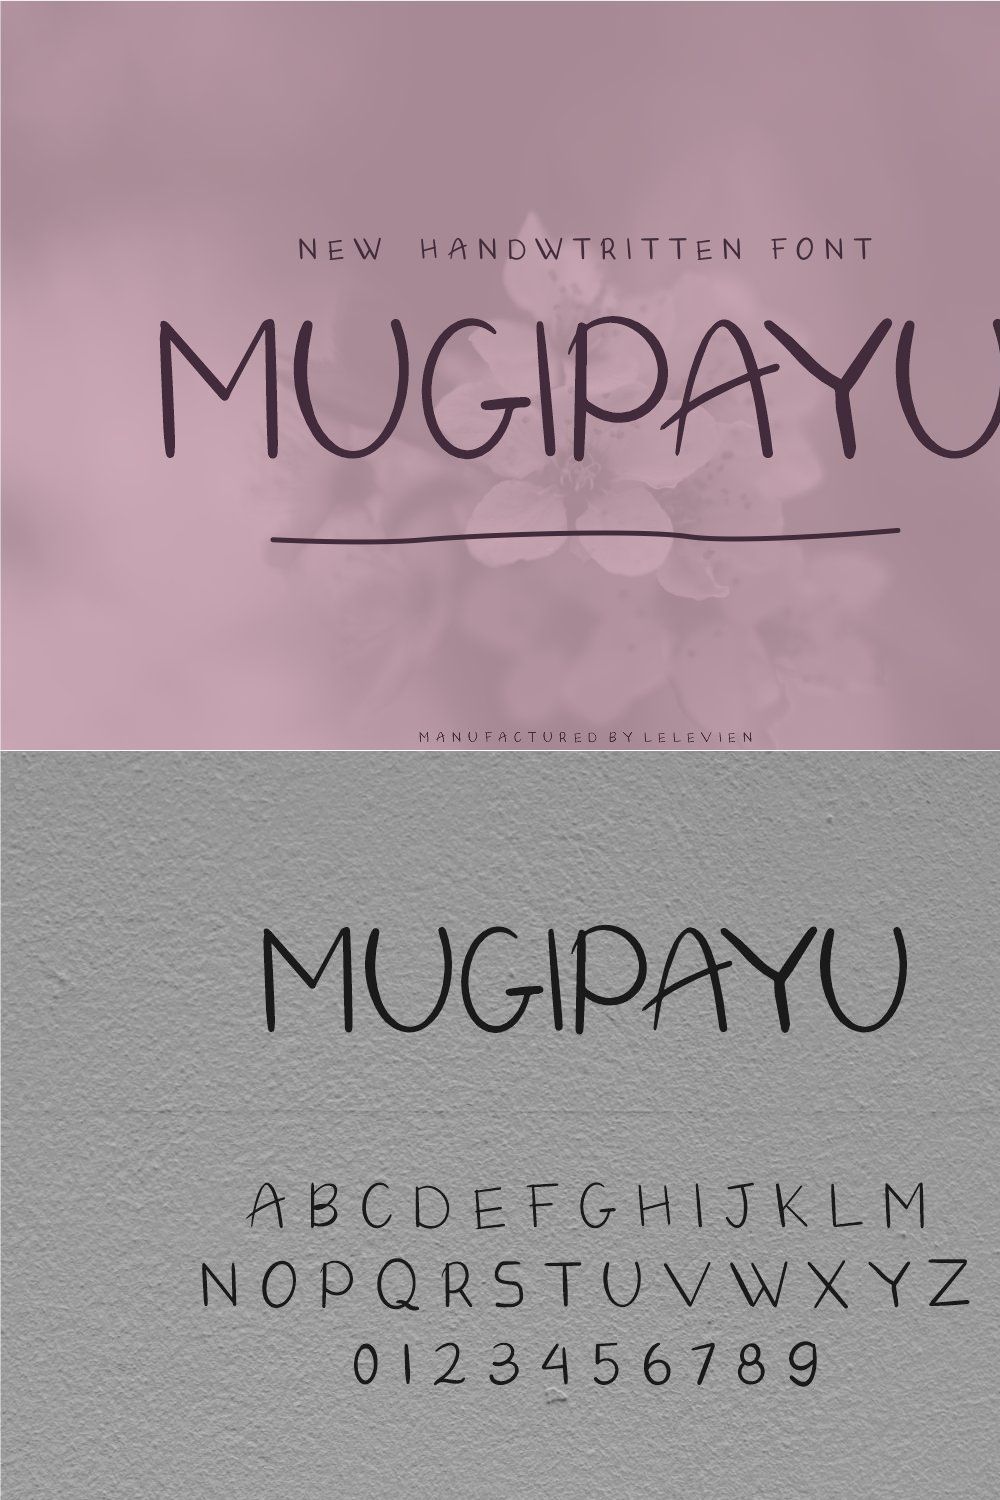 Mugipayu pinterest preview image.